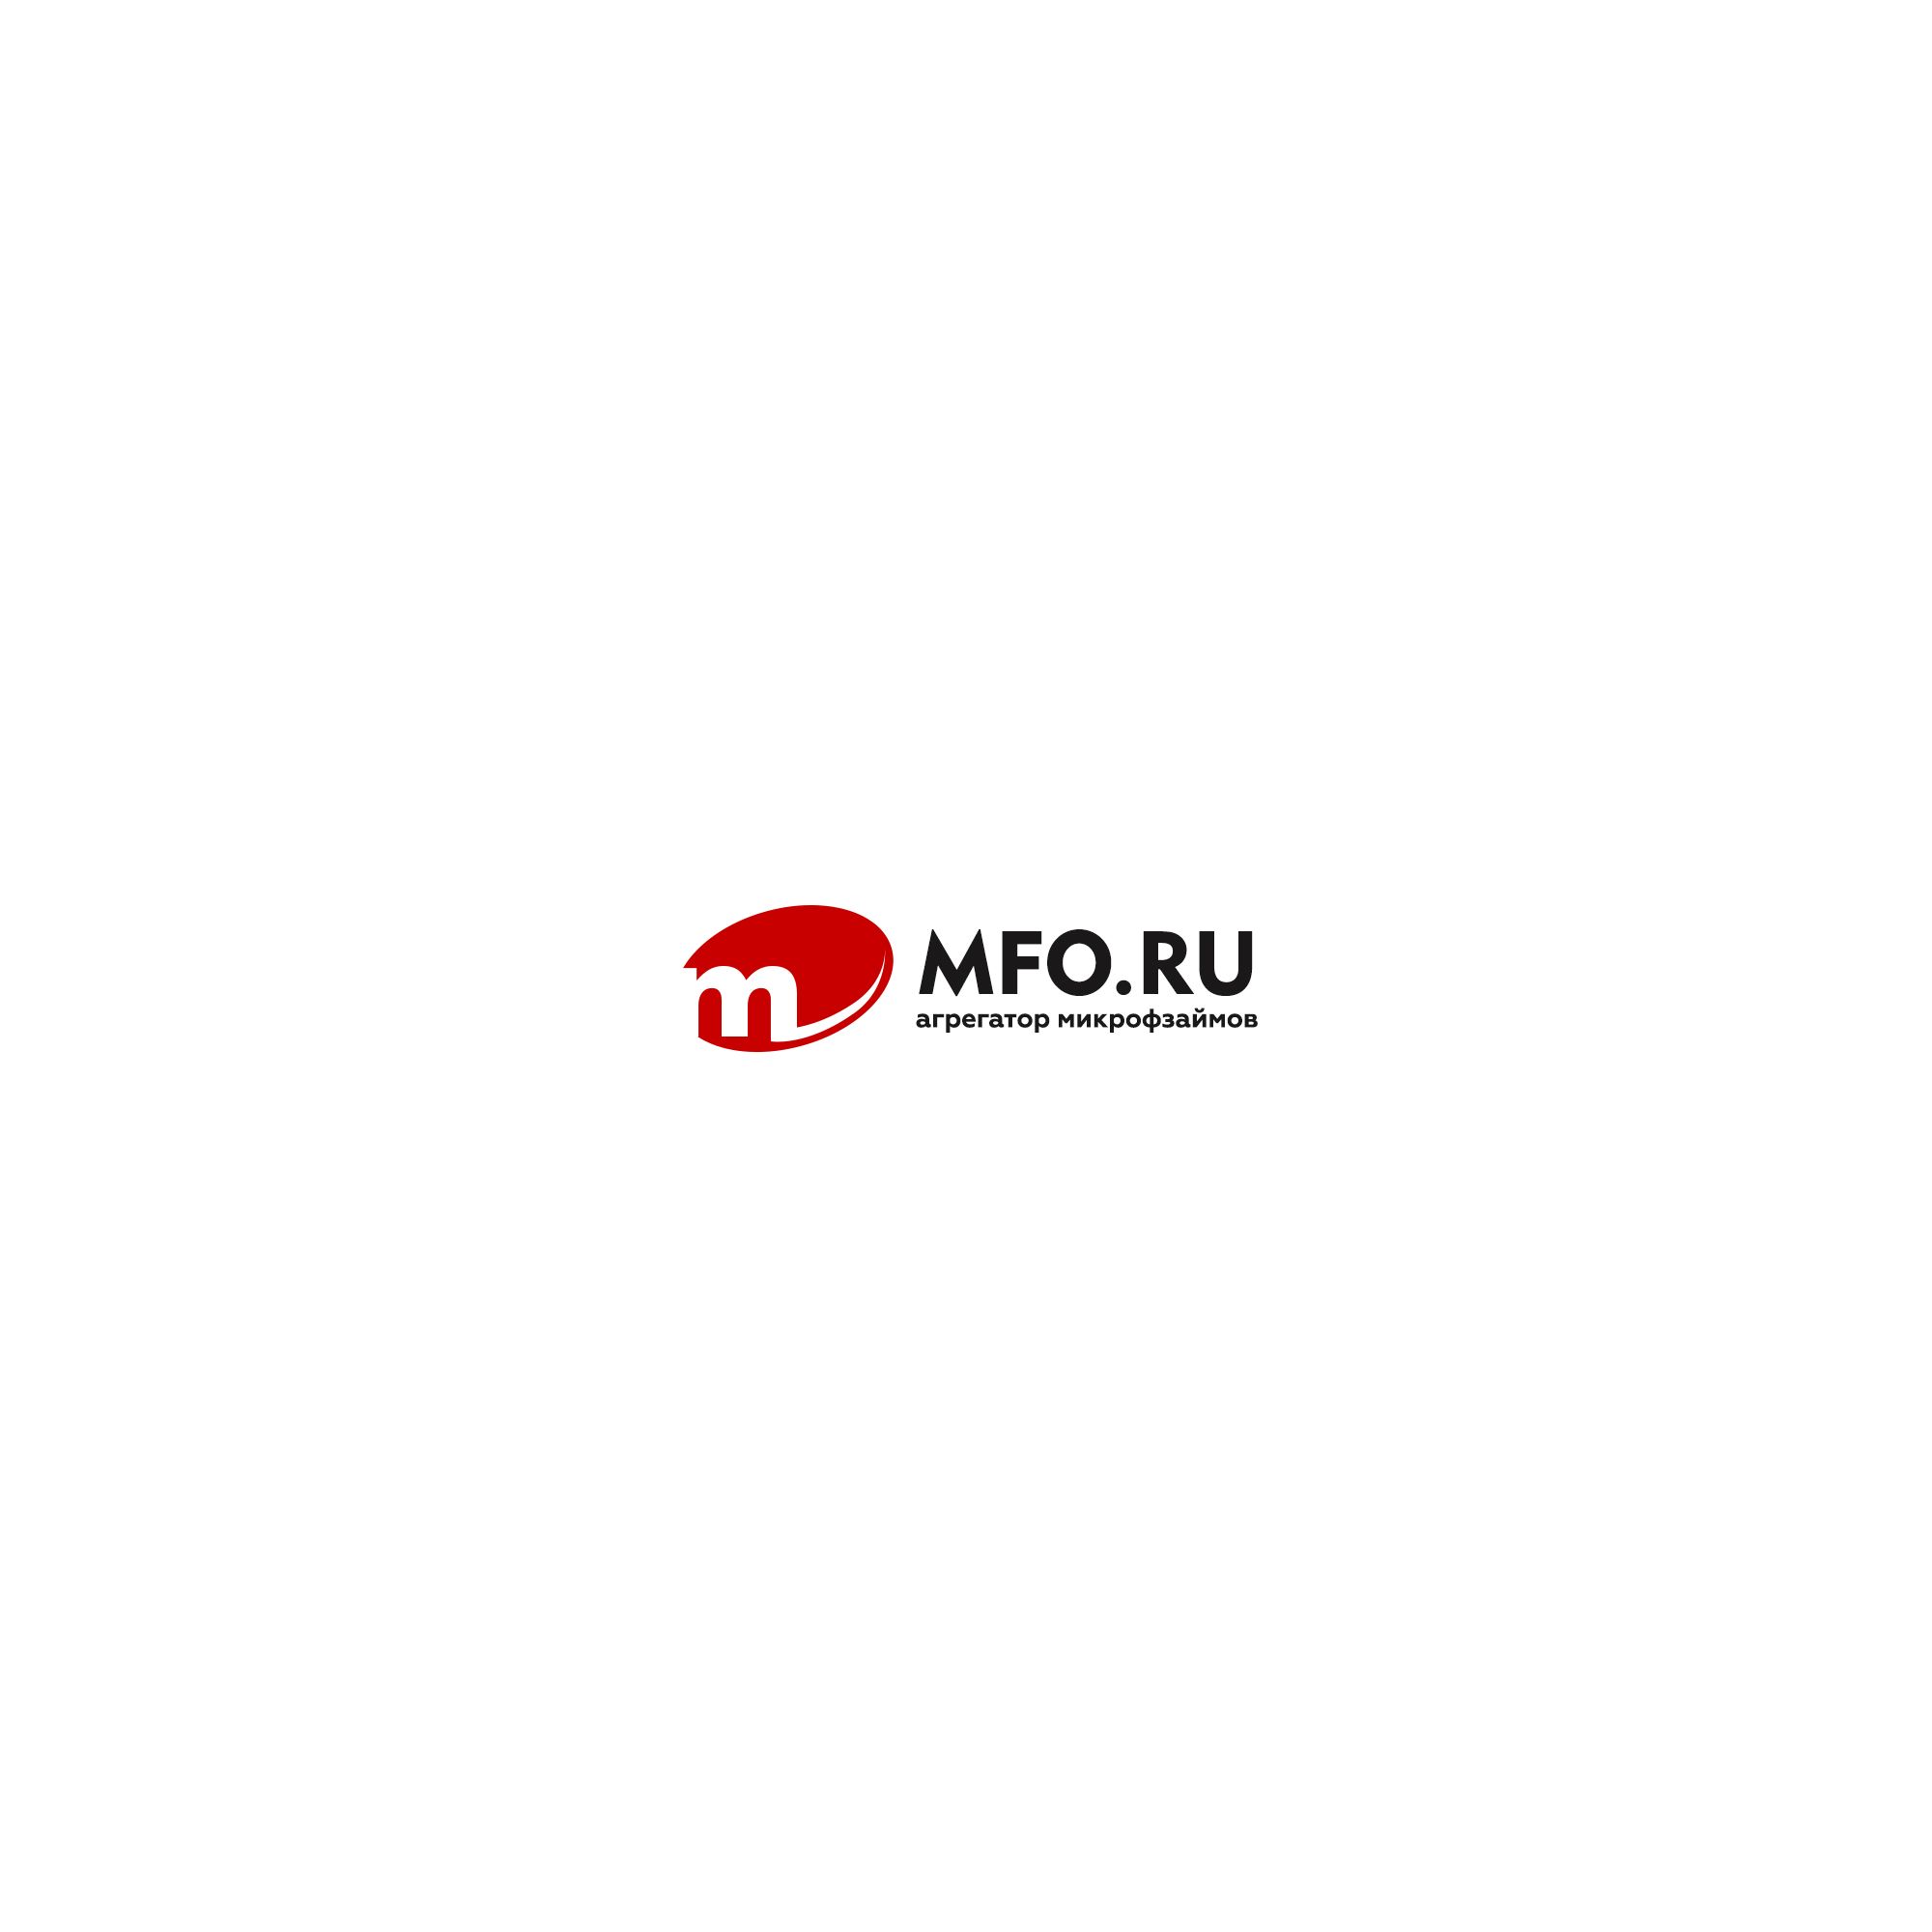 Логотип для MFO.RU - дизайнер weste32